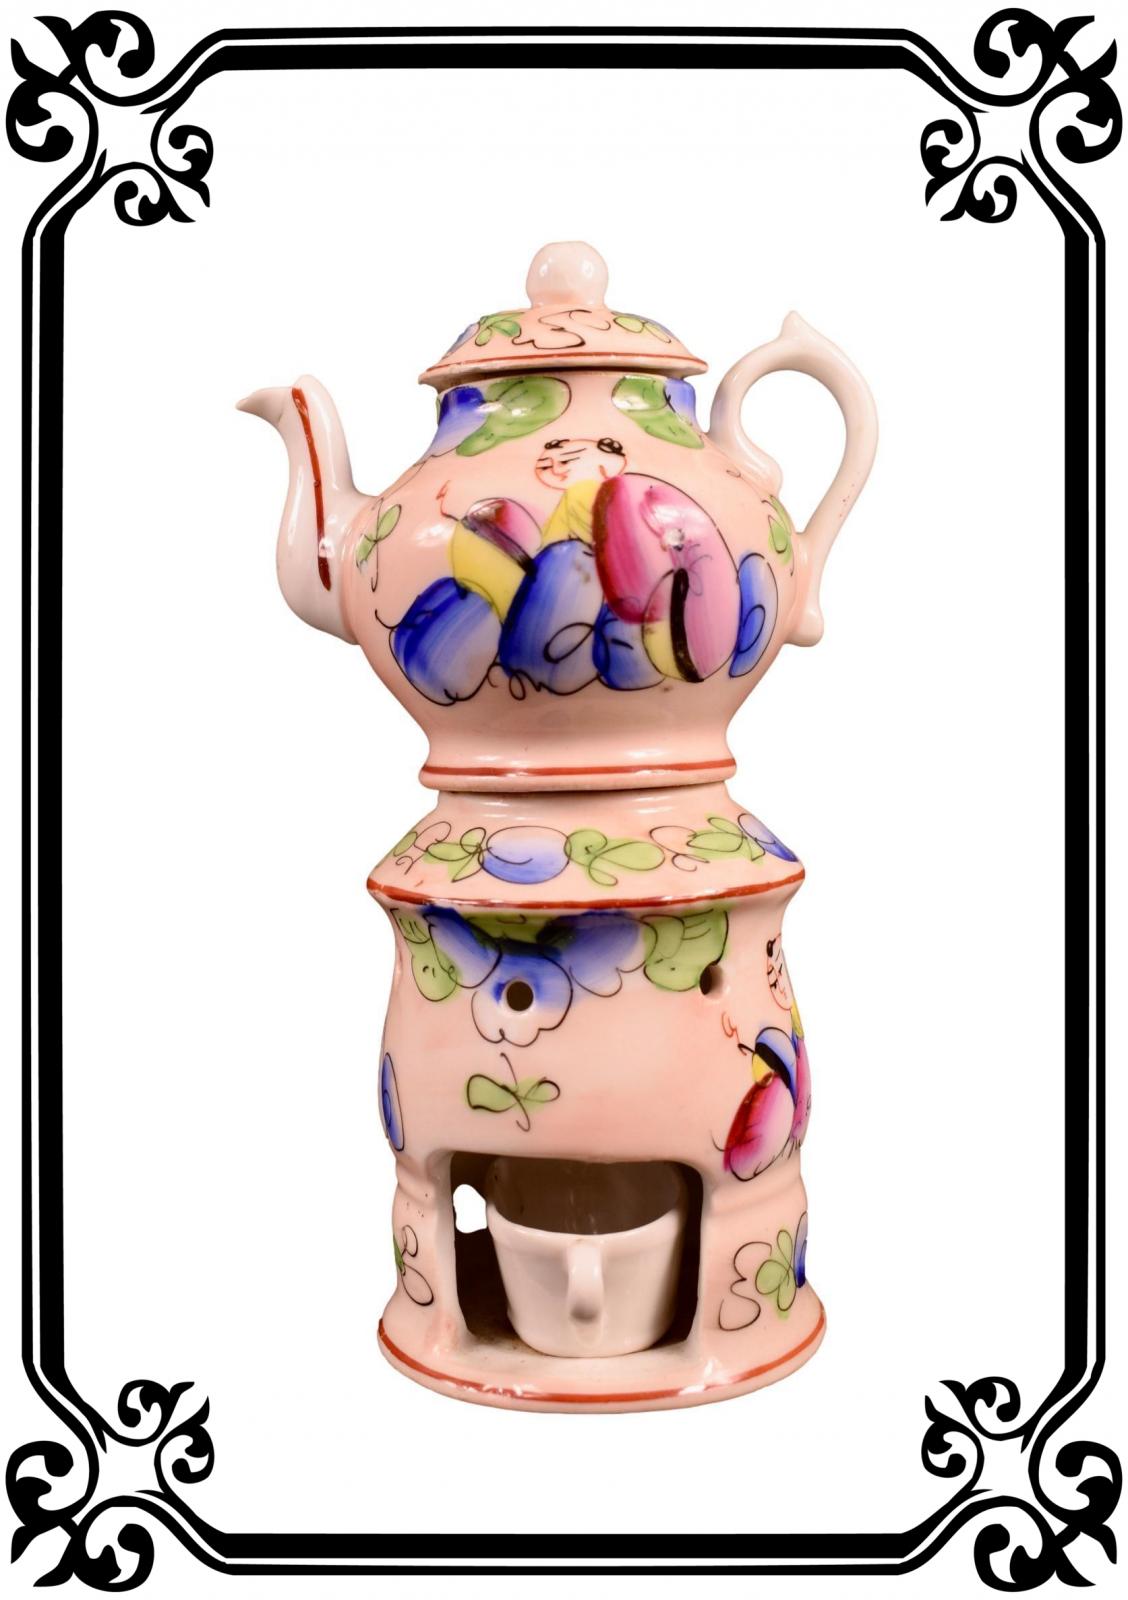 Small herbal tea pot Bayeux porcelain